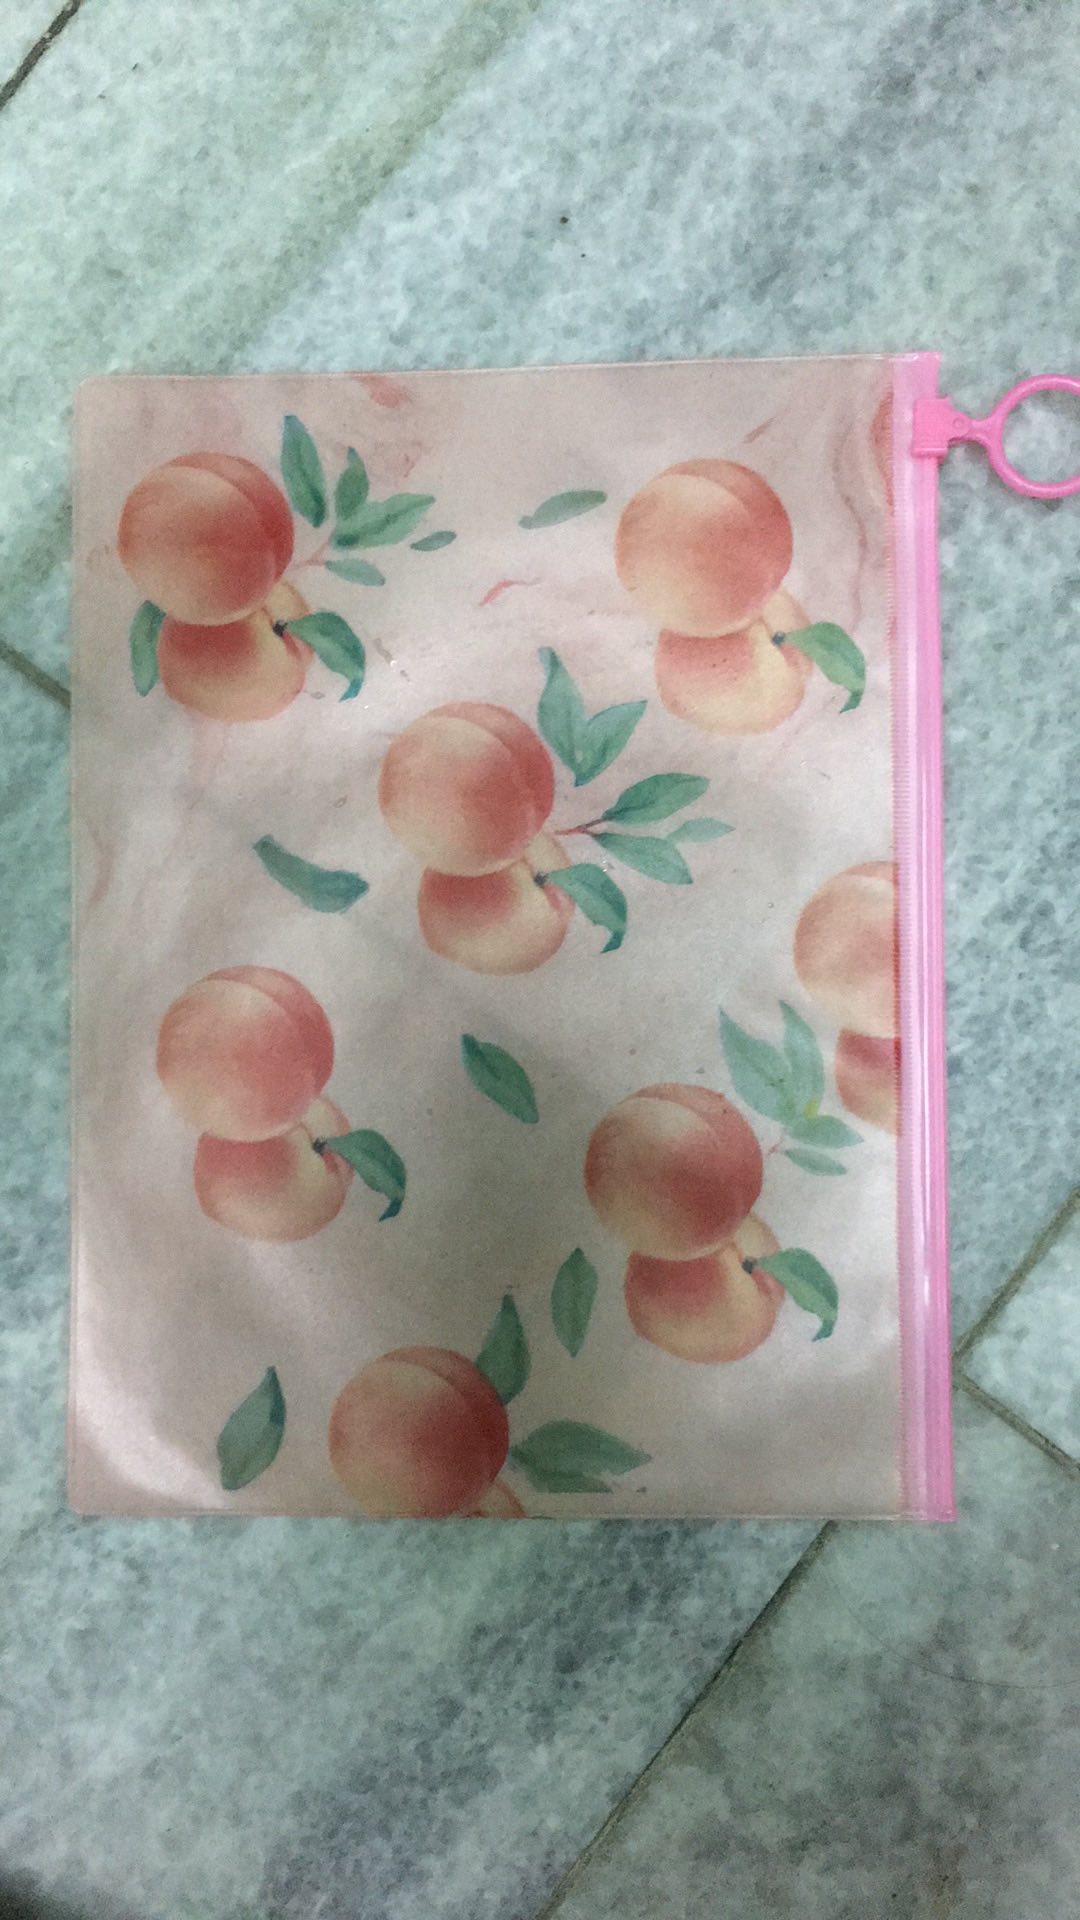 Wadah Serbaguna Zipper Bag Motif Buah Peach / Tempat Penyimpanan Multifungsi Motif Peach Simple Pink